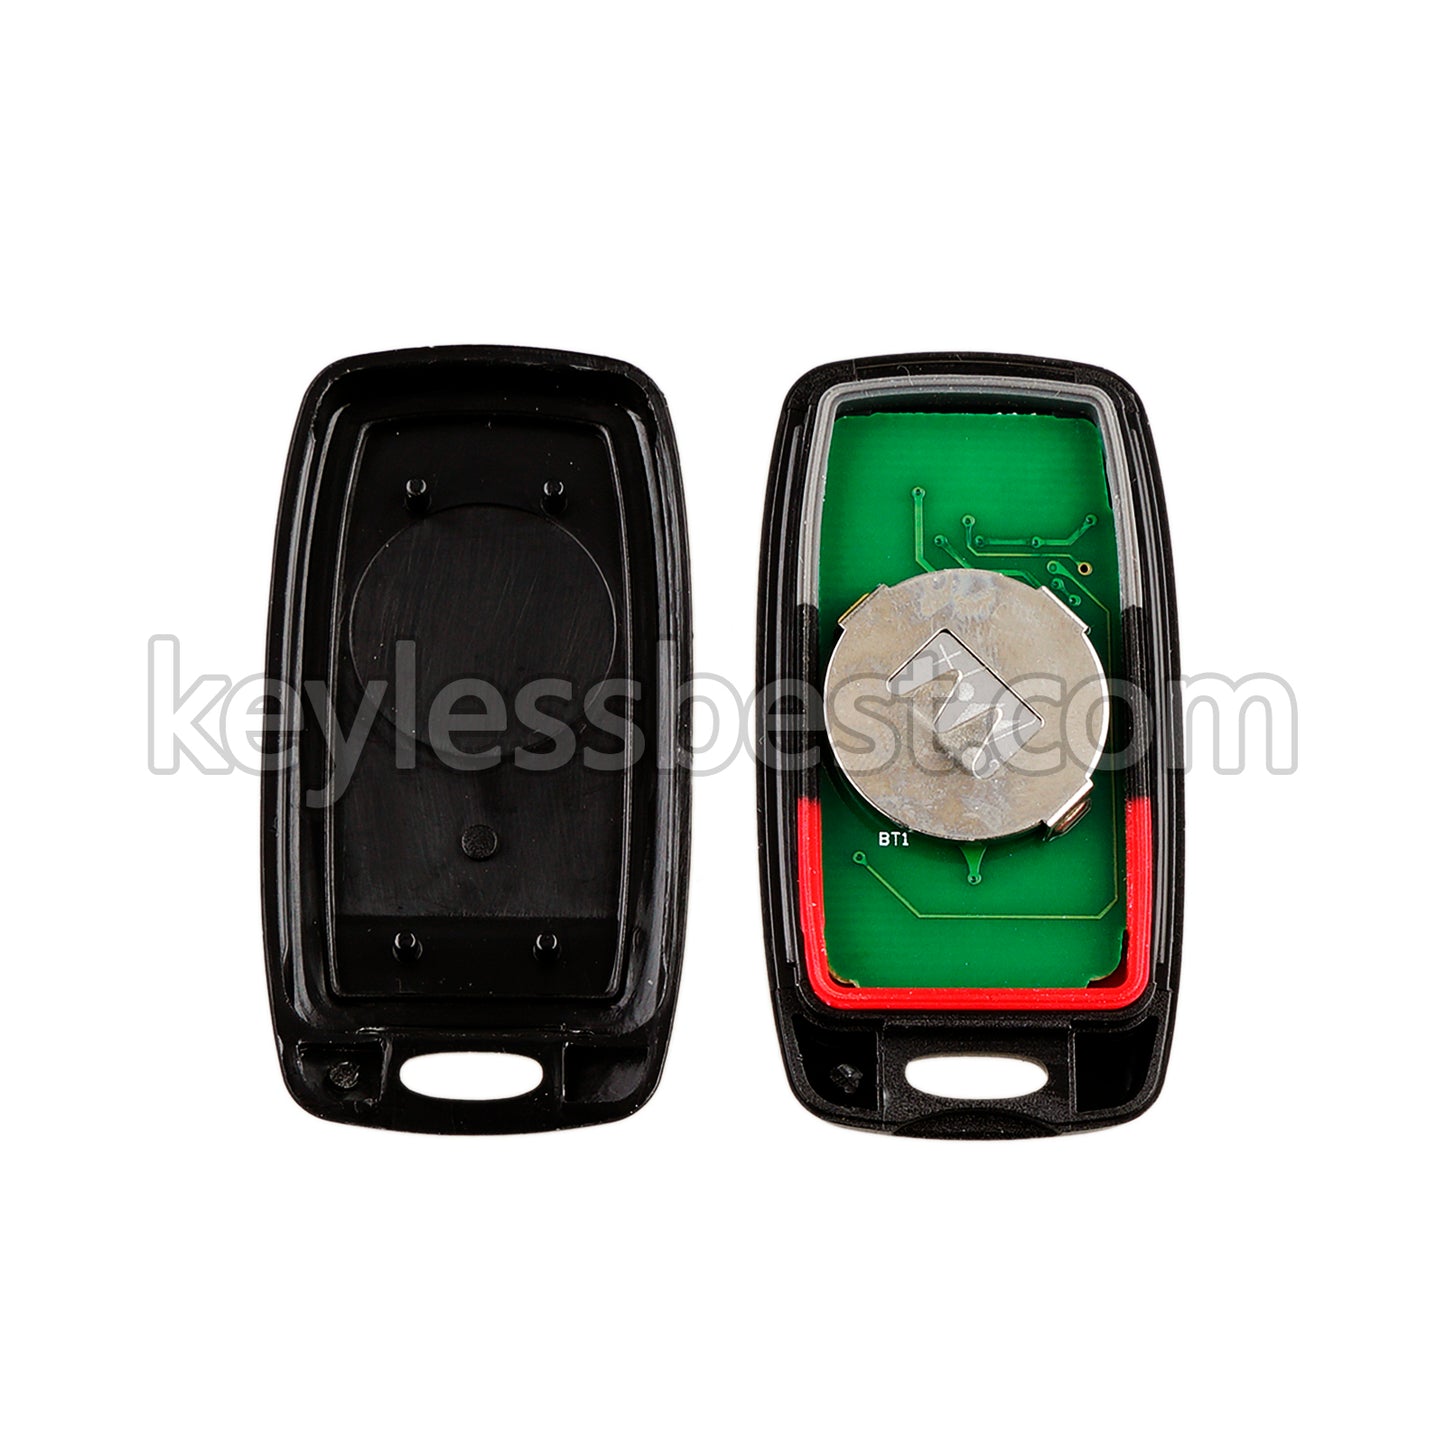 2003 - 2008 Mazda 3 6 / 3 Buttons Remote Key / KPU41846 / 313.8MHz